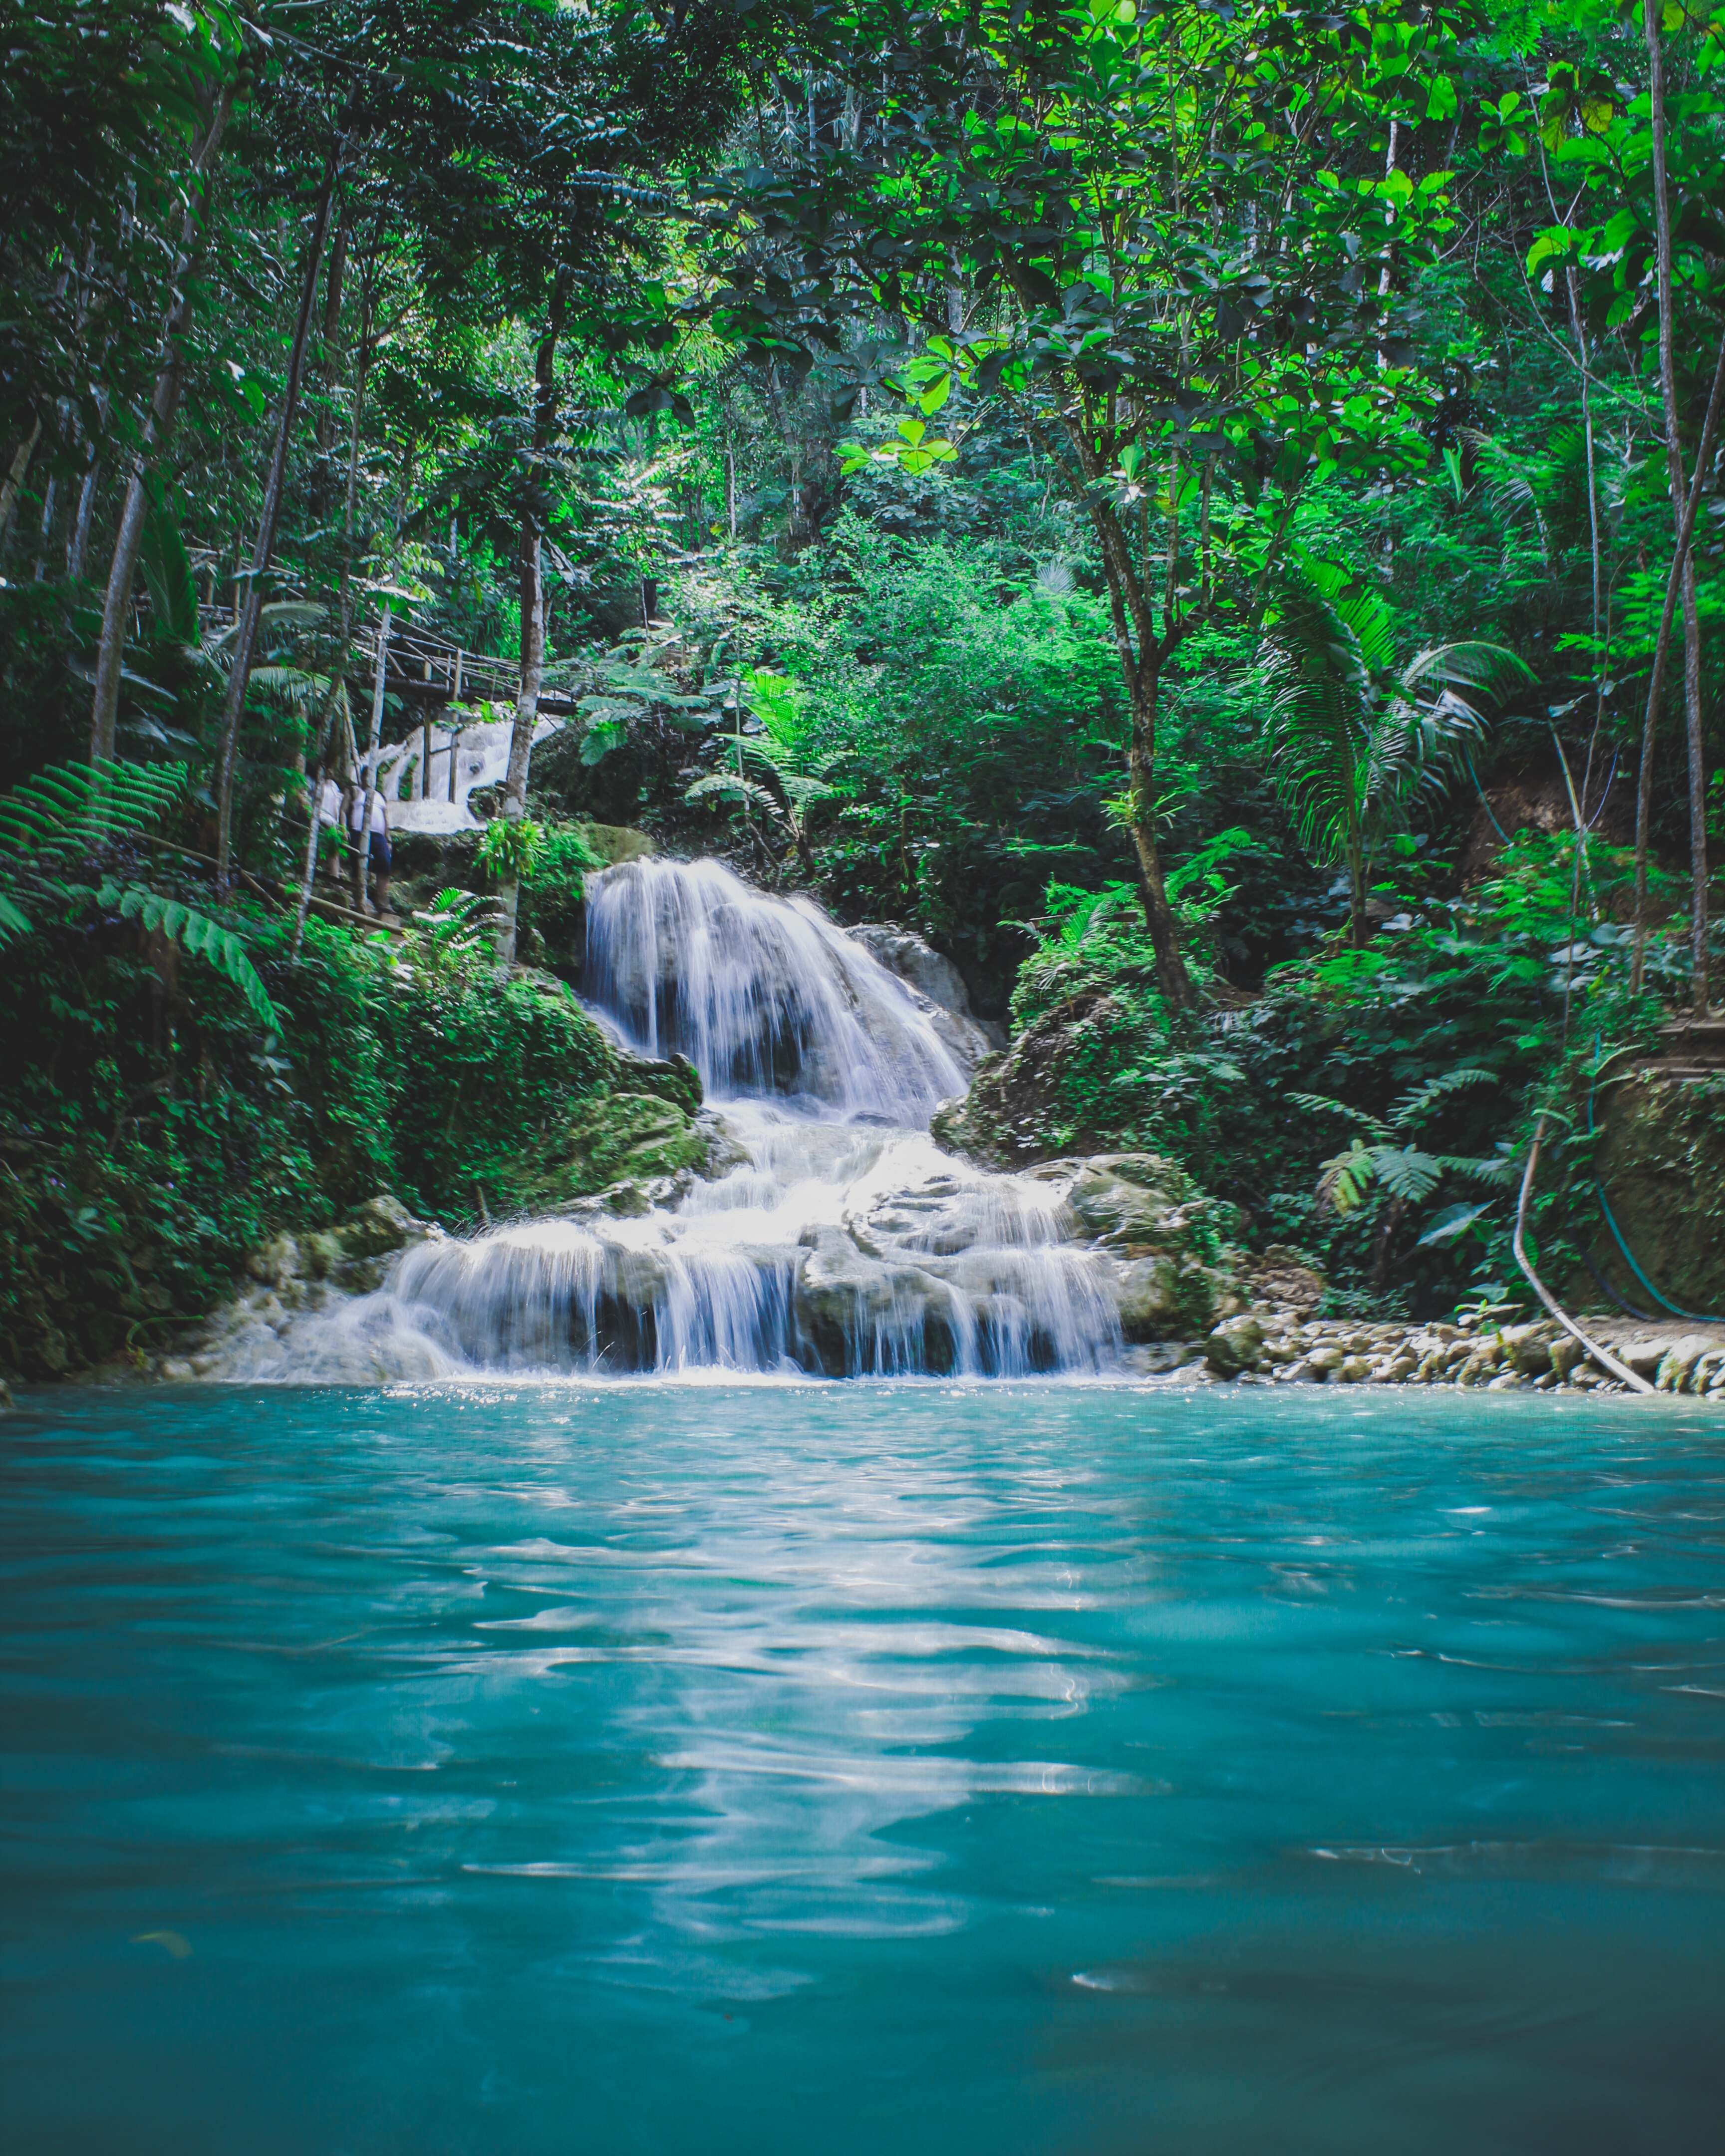 Best Waterfall Photo · 100% Free Downloads